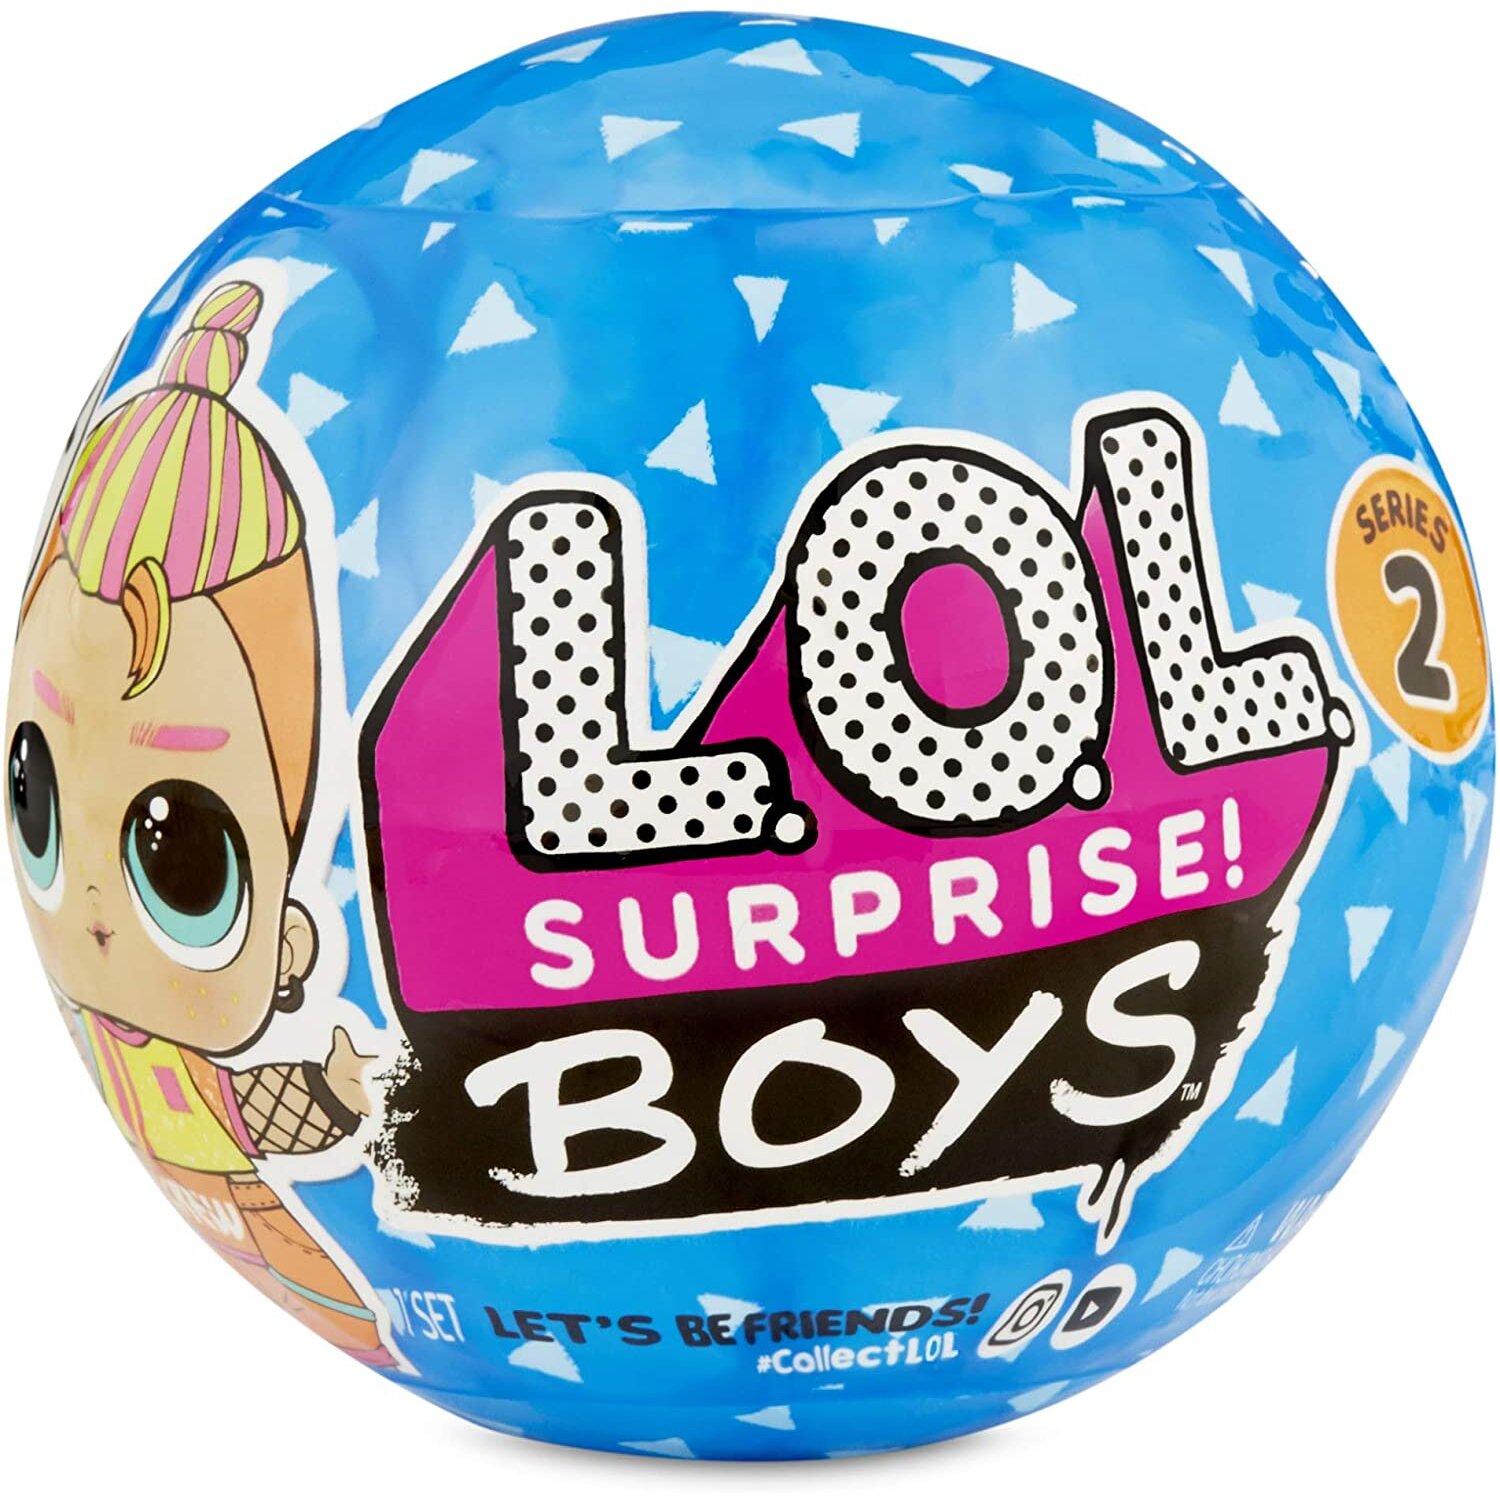 L.O.L. Surprise! 564799E7C Boys Series 2 Doll with 7 Surprises, Multi